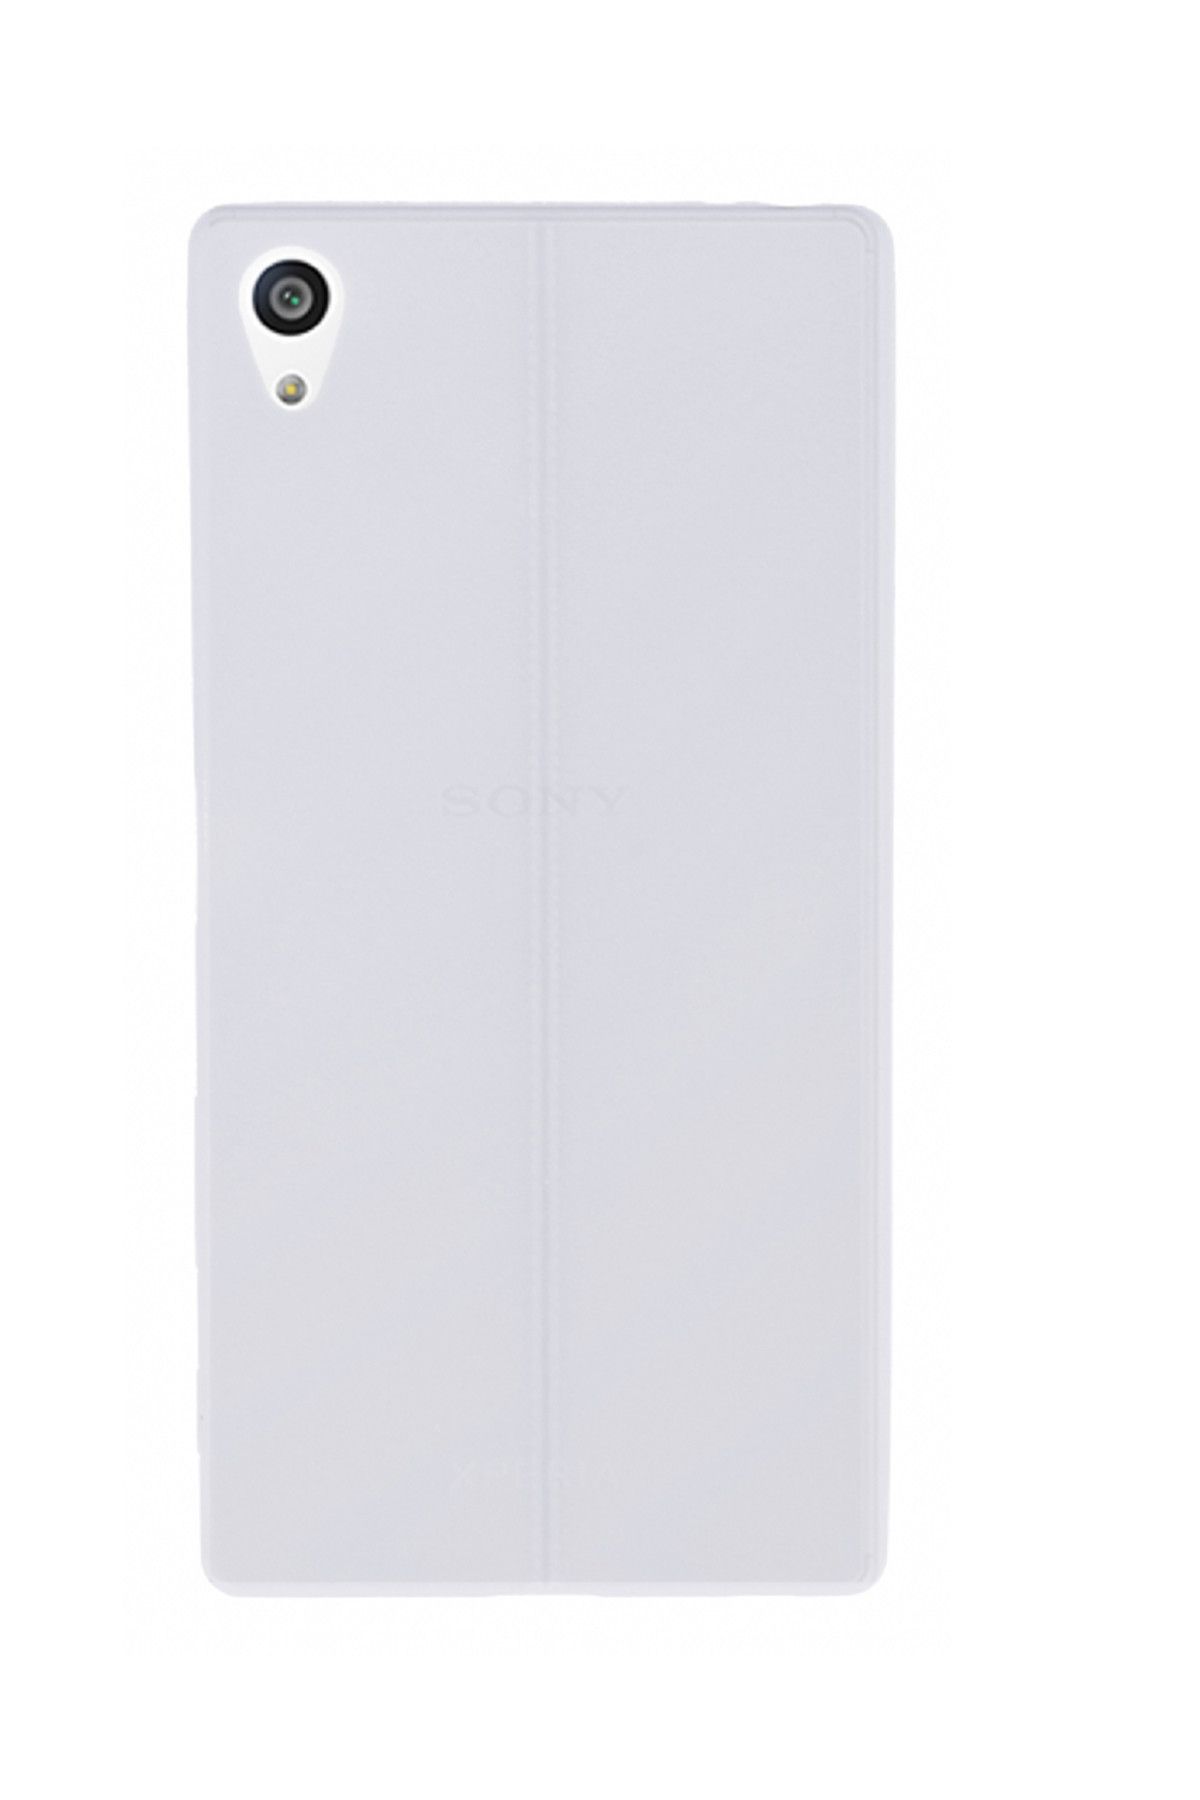 Mobilcadde Sony Xperia Z5 Premium Deri Desenli Ultra İnce Şeffaf Beyaz Silikon Kılıf